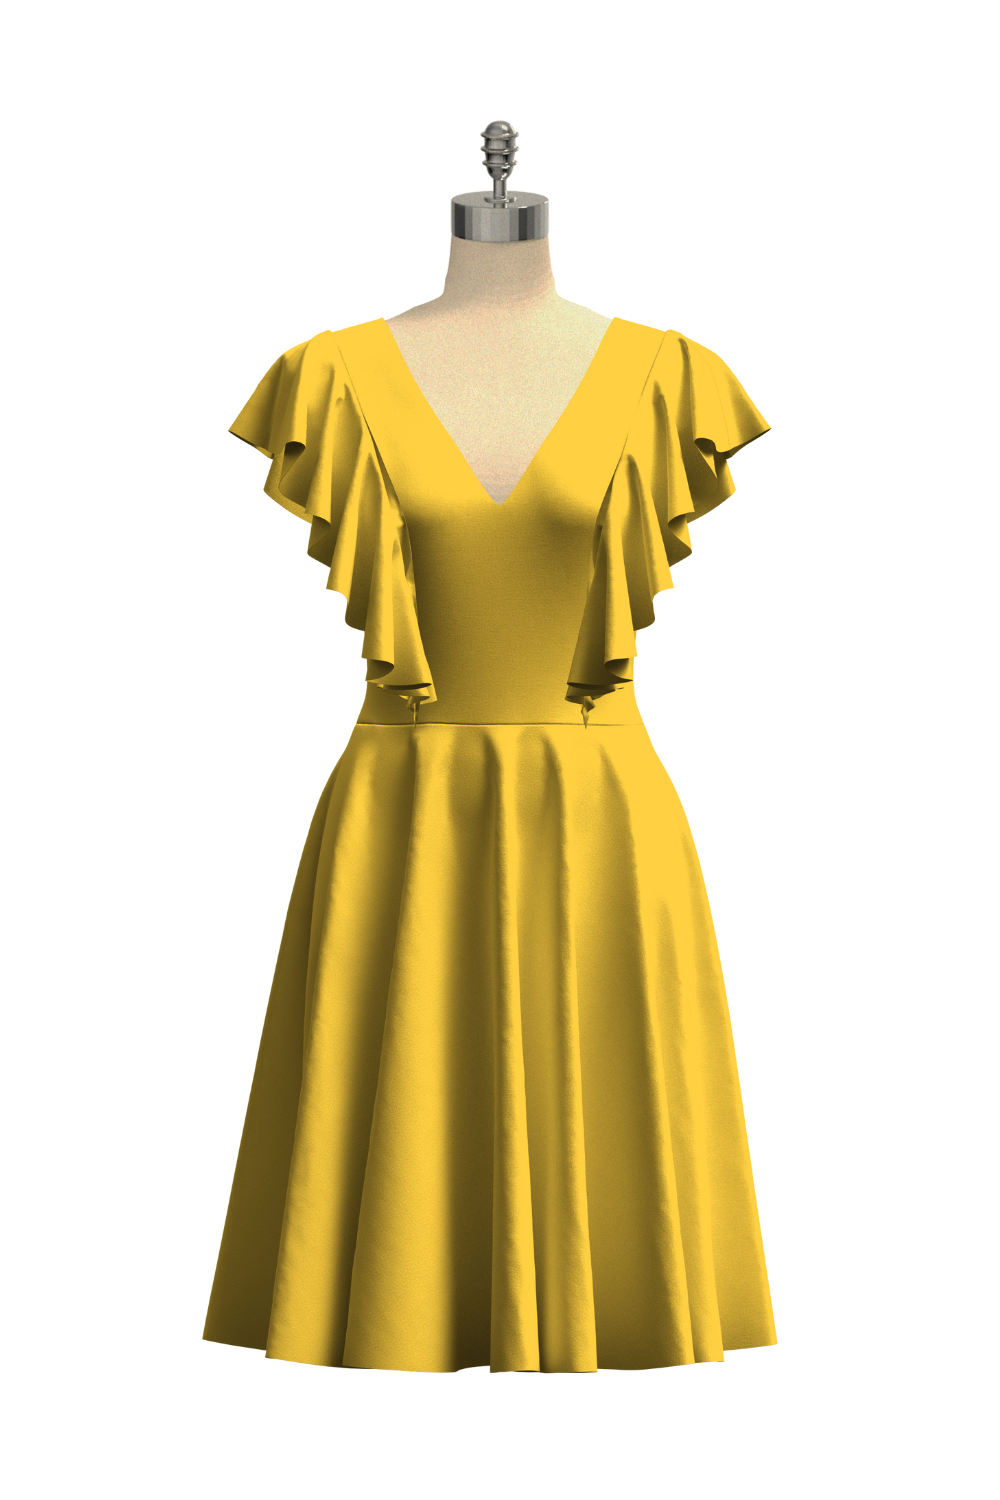 Chloé Ruffled Dress